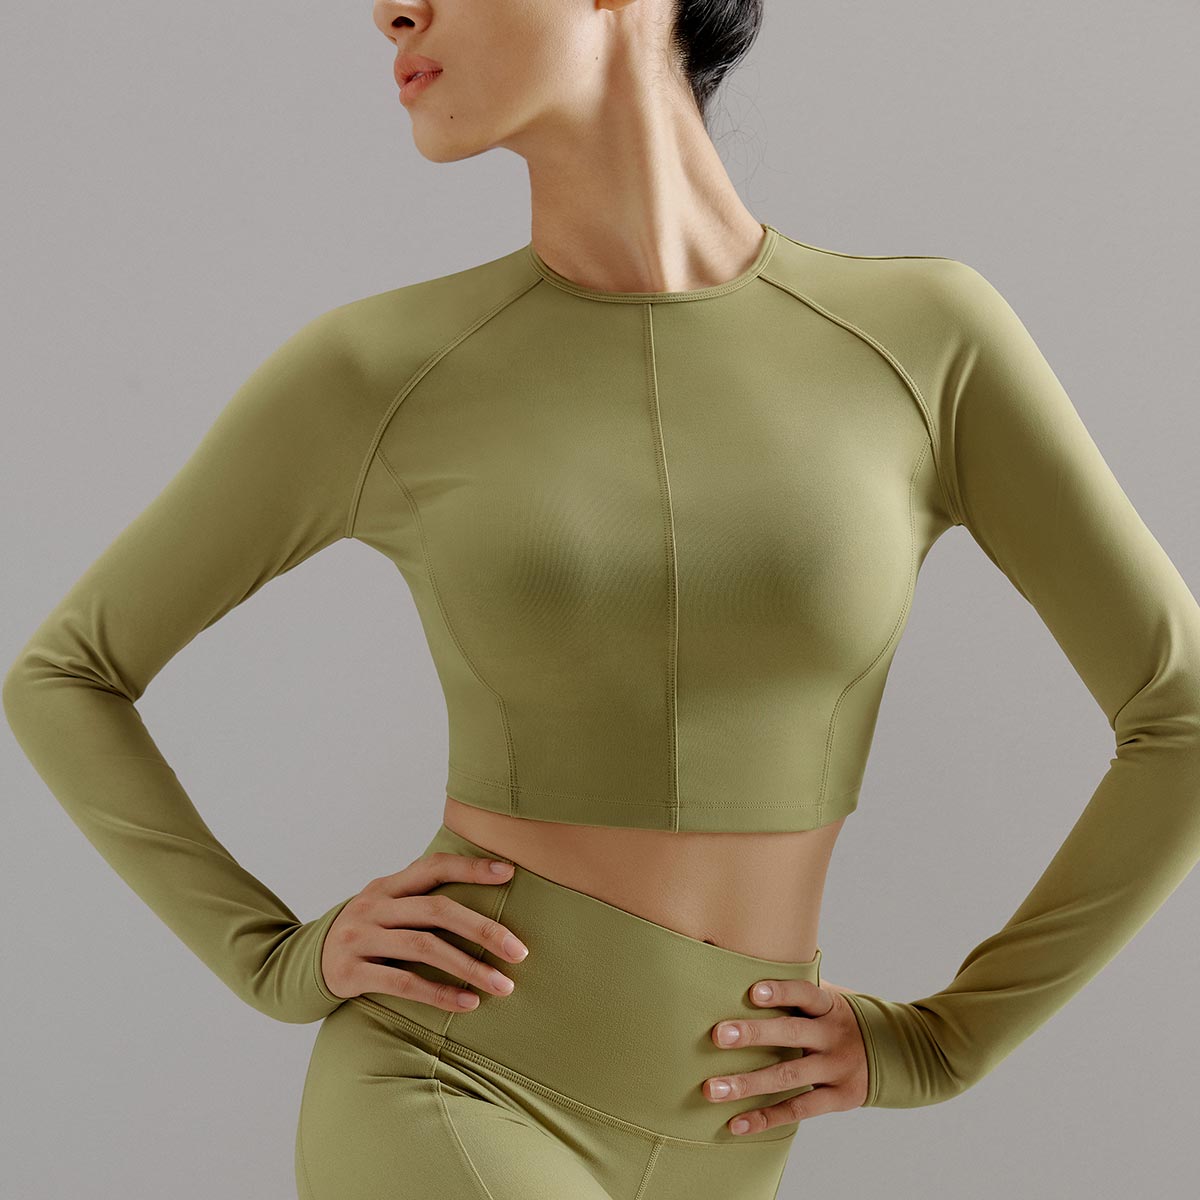 Woman wearing green activewear shirt and leggings